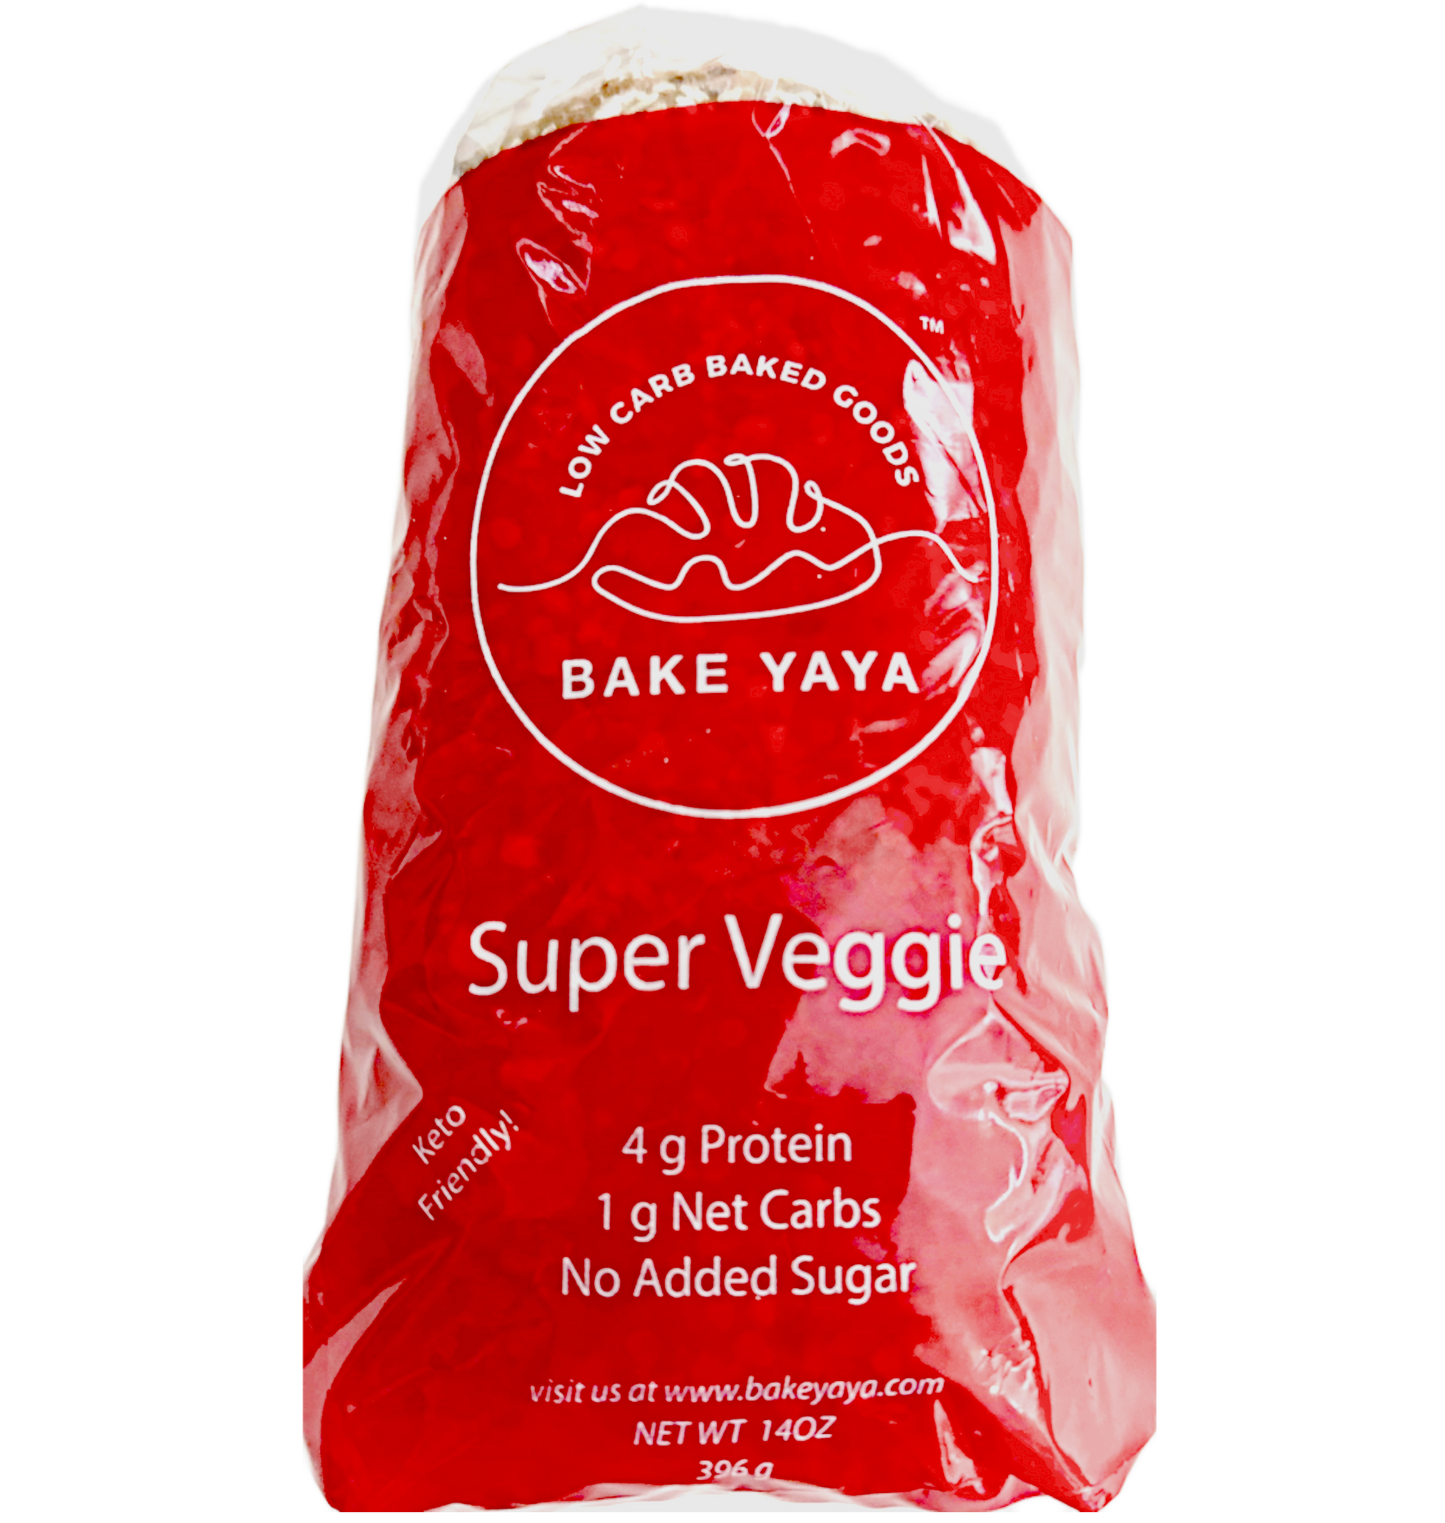 Super Veggie Sliced Bread - Keto, Protein, Low Carb, No Sugar - 1 Loaf, Sliced